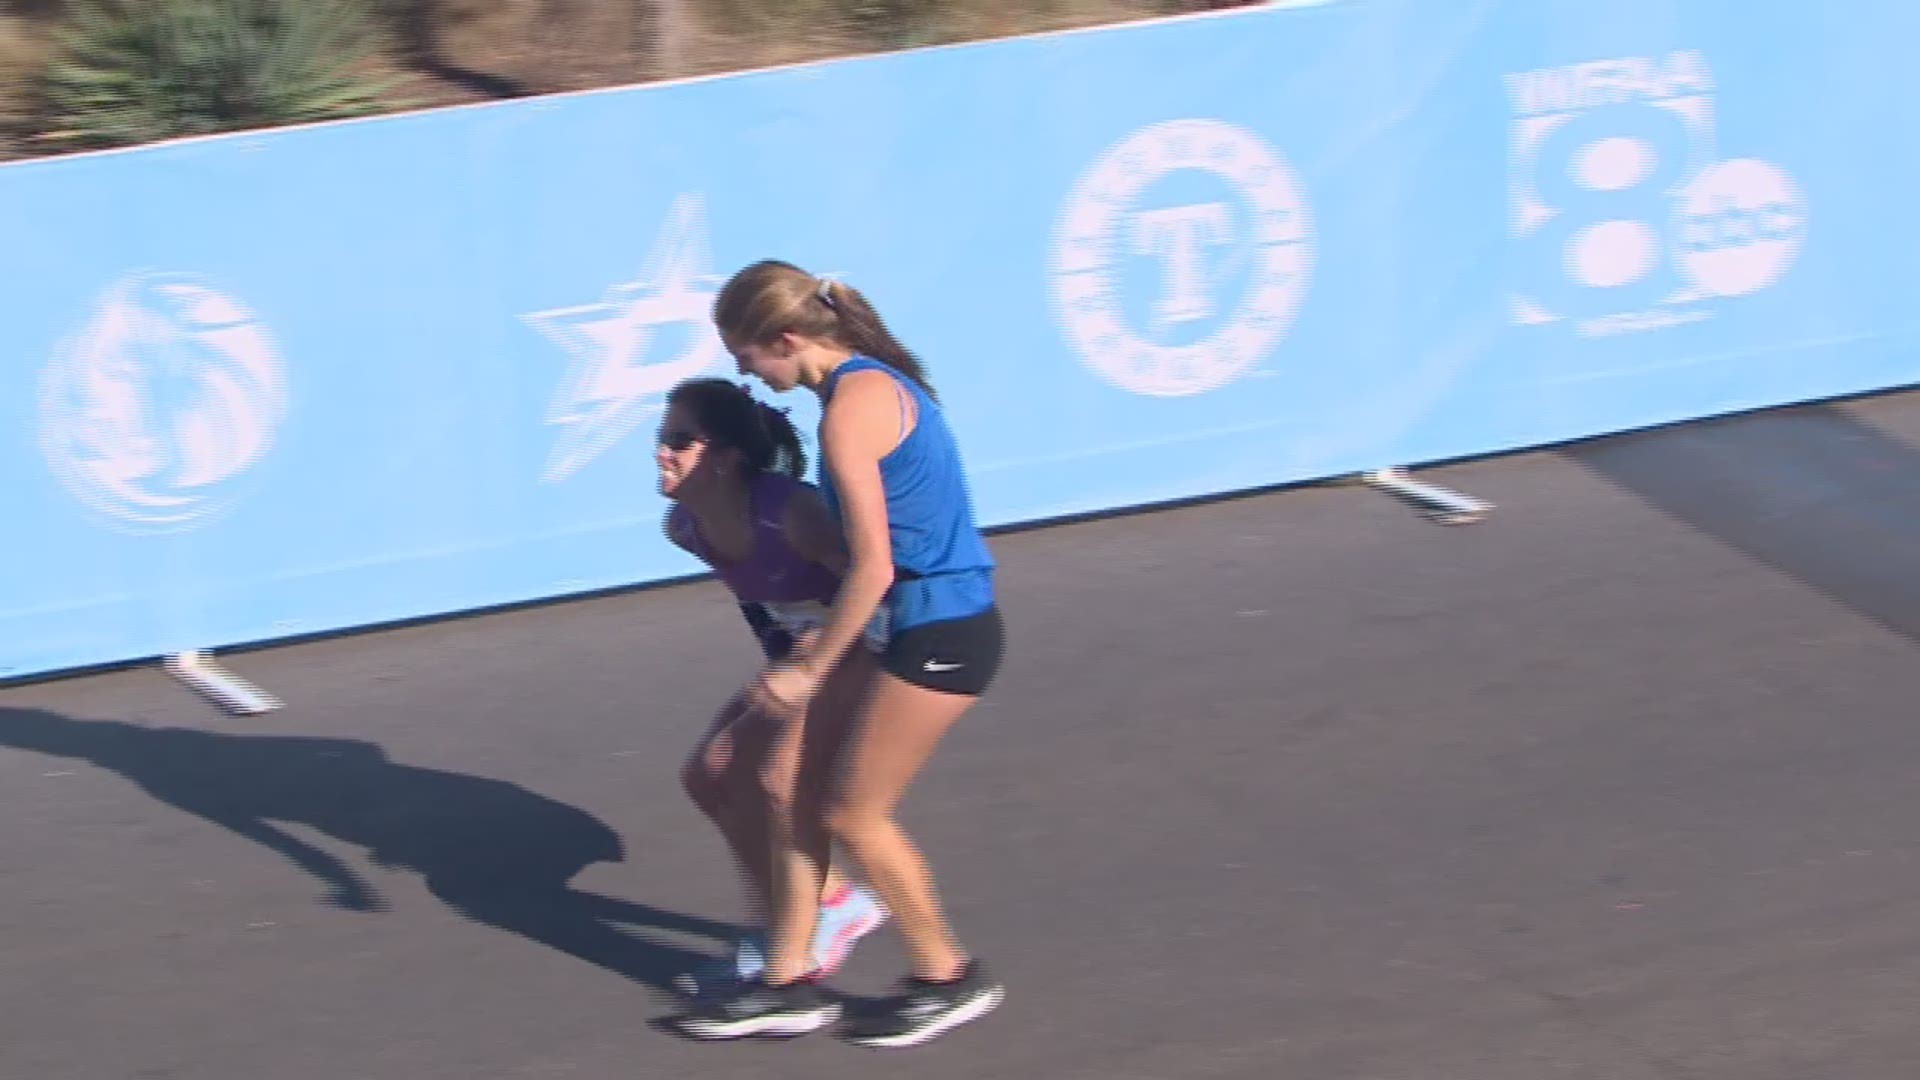 WATCH: Winner in women's finish at the BMW Dallas Marathon falls to the ground